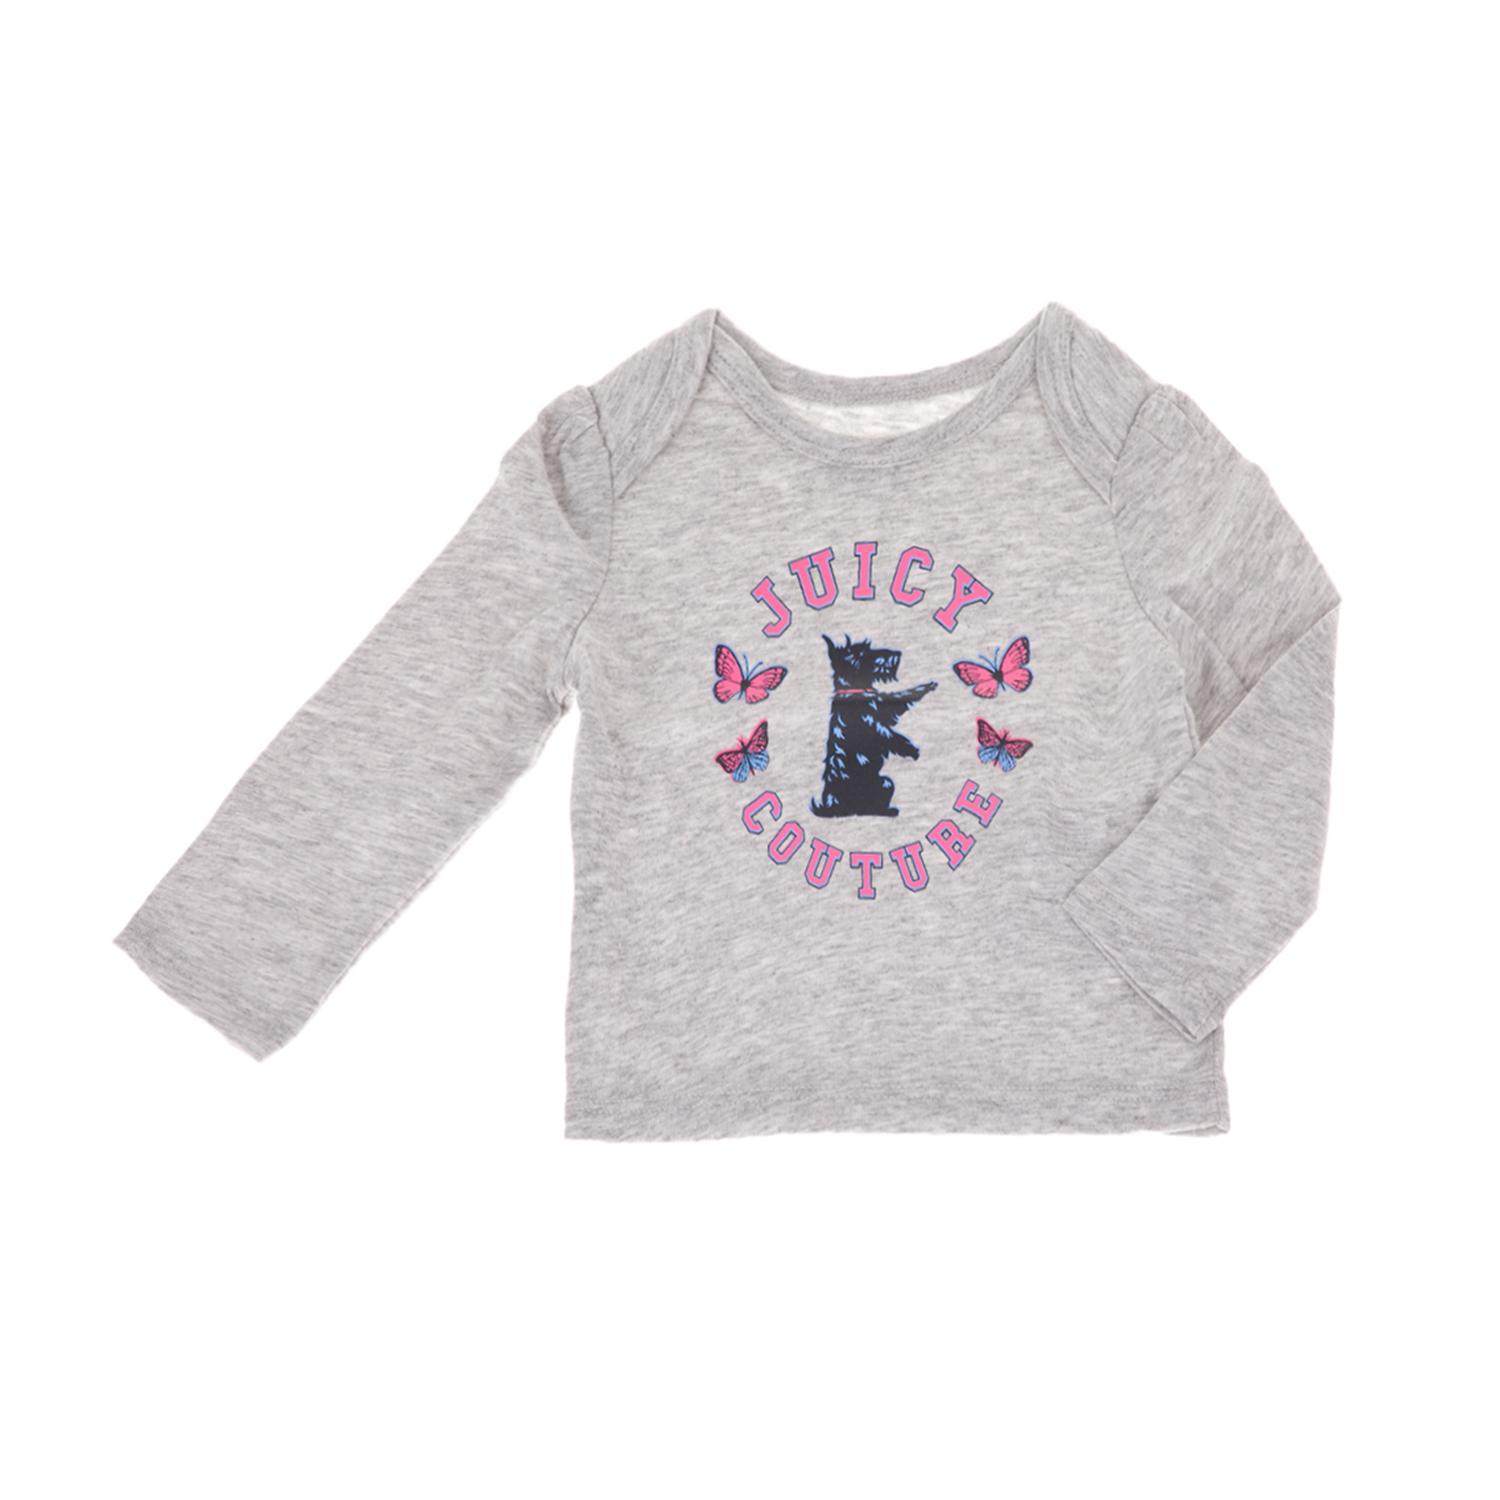 JUICY COUTURE KIDS - Βρεφική μπλούζα JUICY COUTURE KIDS SCOTTIE BUTTERFLY γκρι Παιδικά/Baby/Ρούχα/Μπλούζες